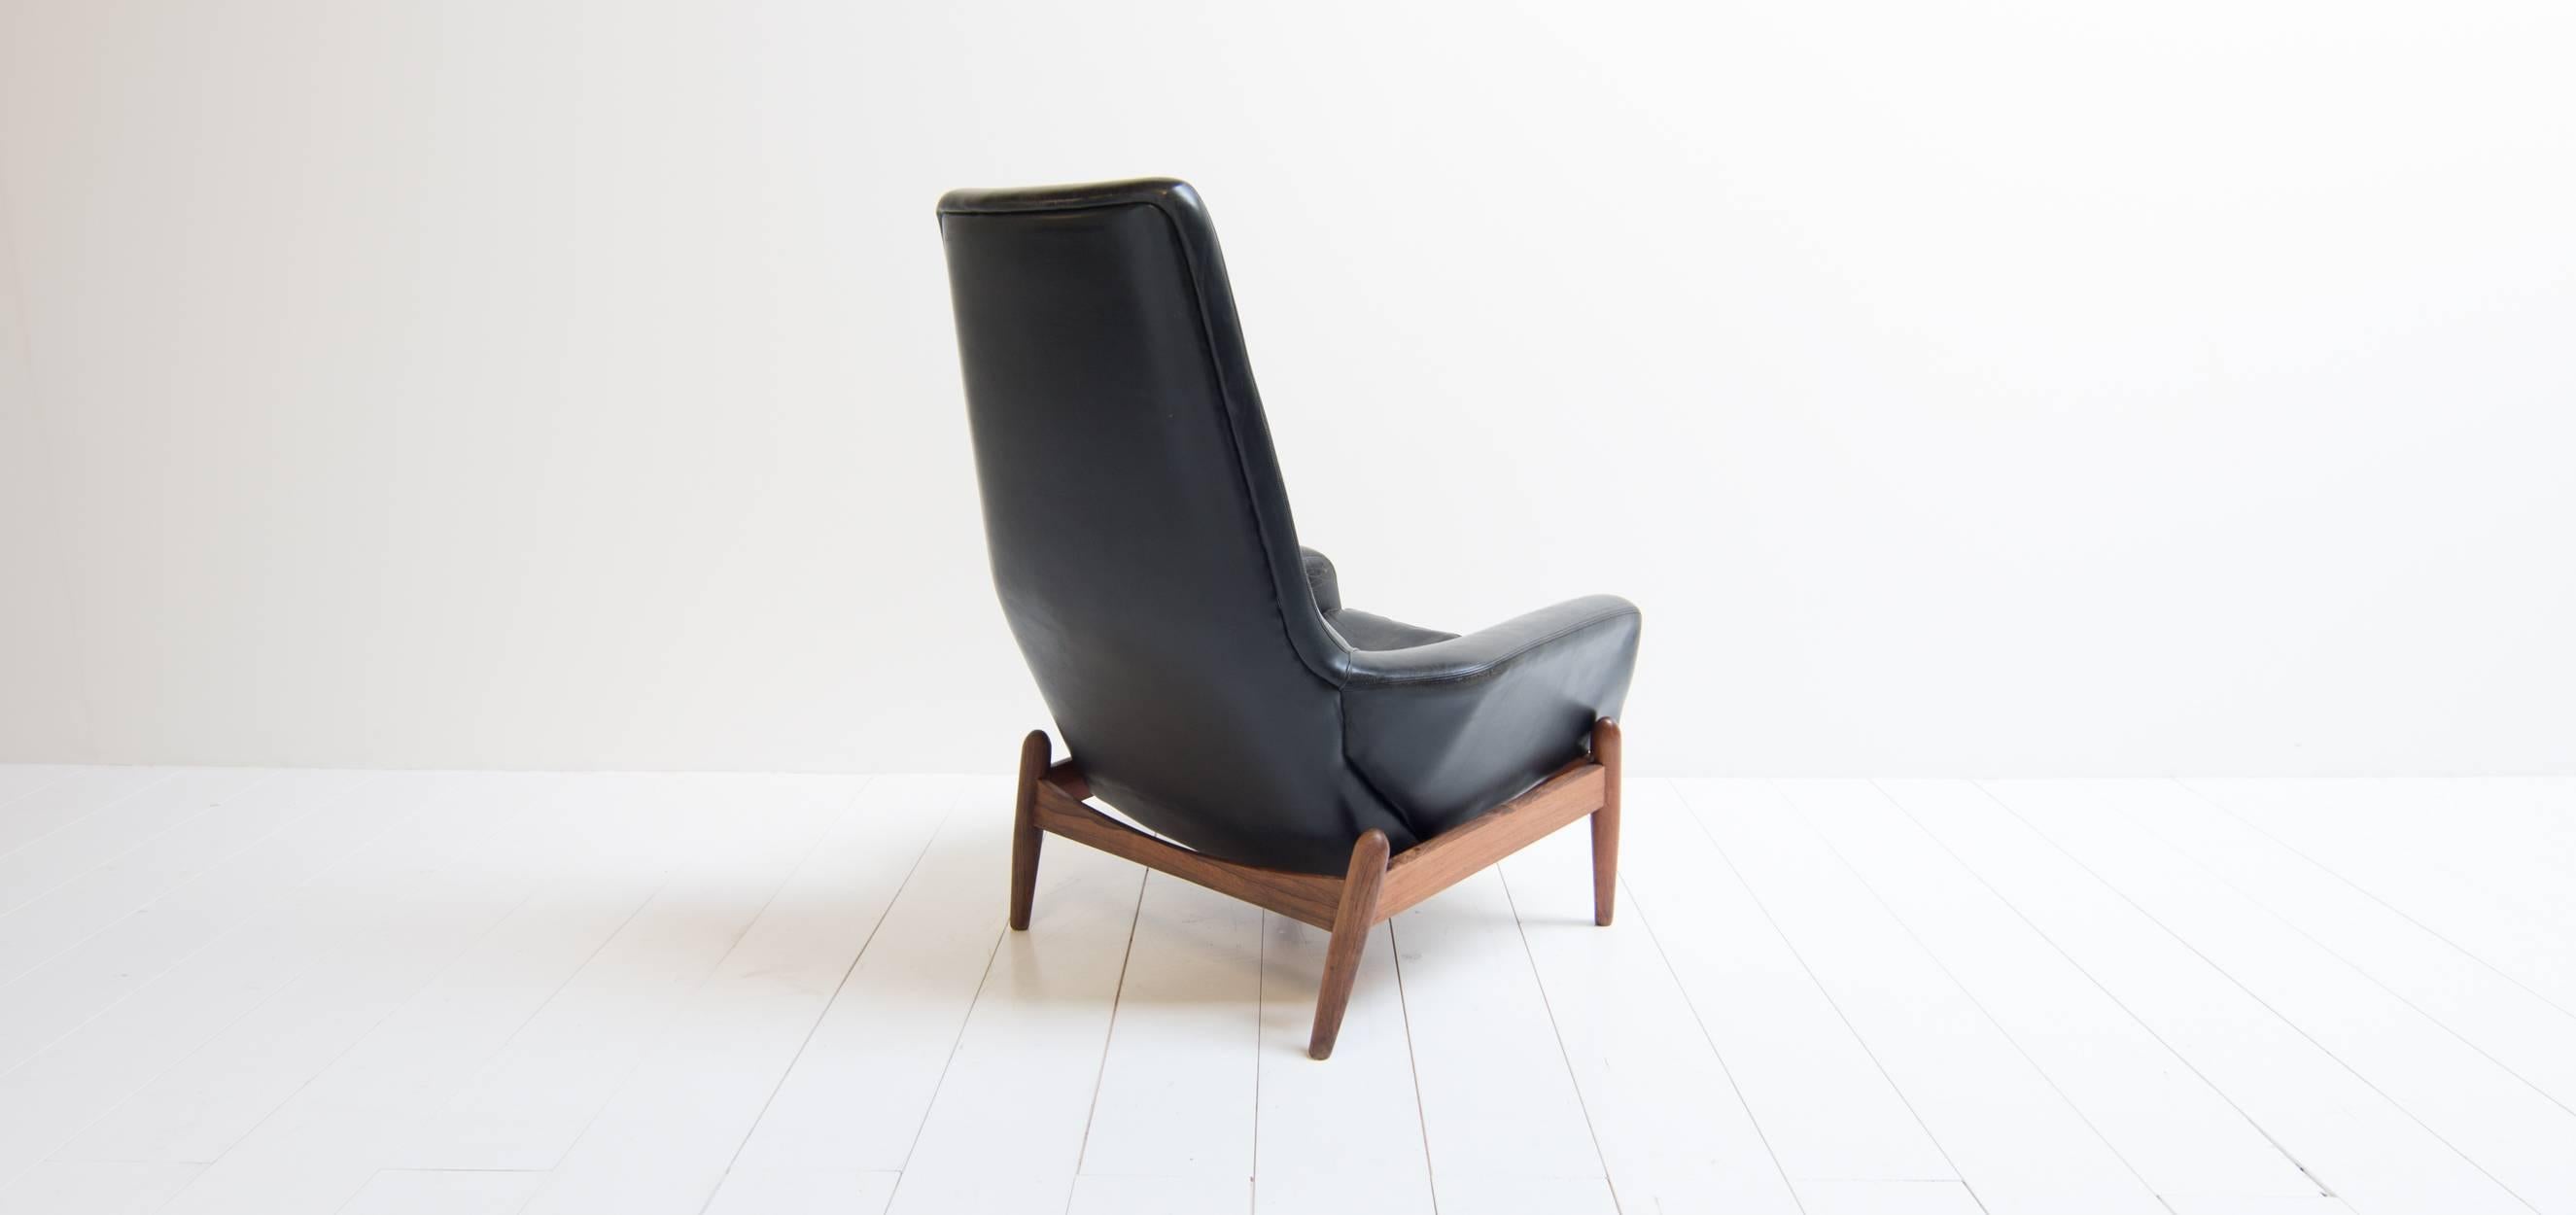 Scandinavian Modern Ib Kofod Larsen Bovenkamp Lounge Chair from the 1960s For Sale